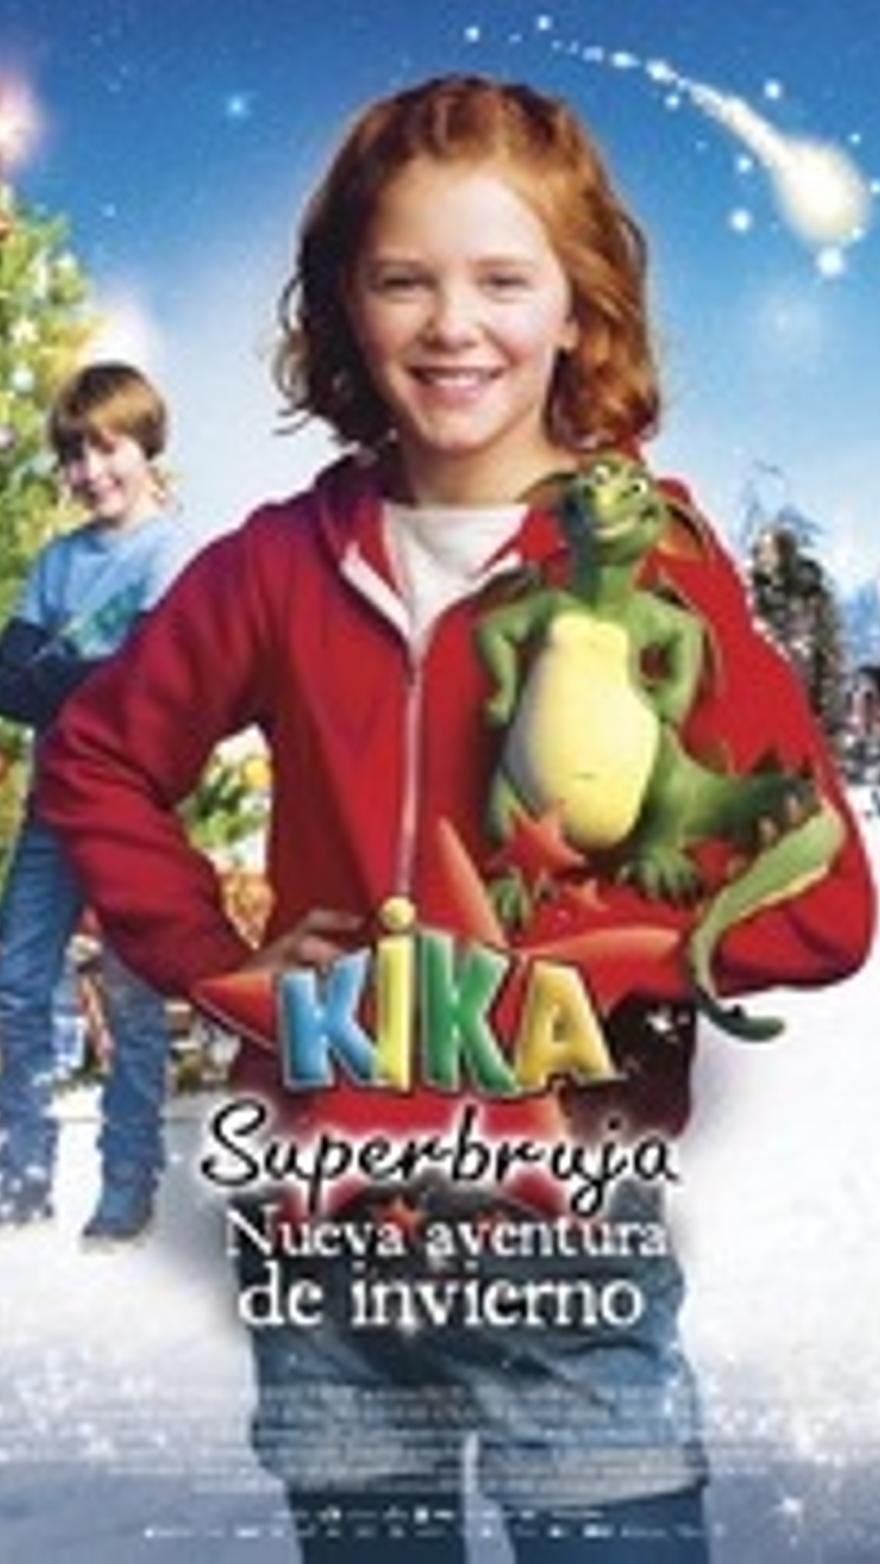 Kika Superbruja. Nueva aventura de invierno